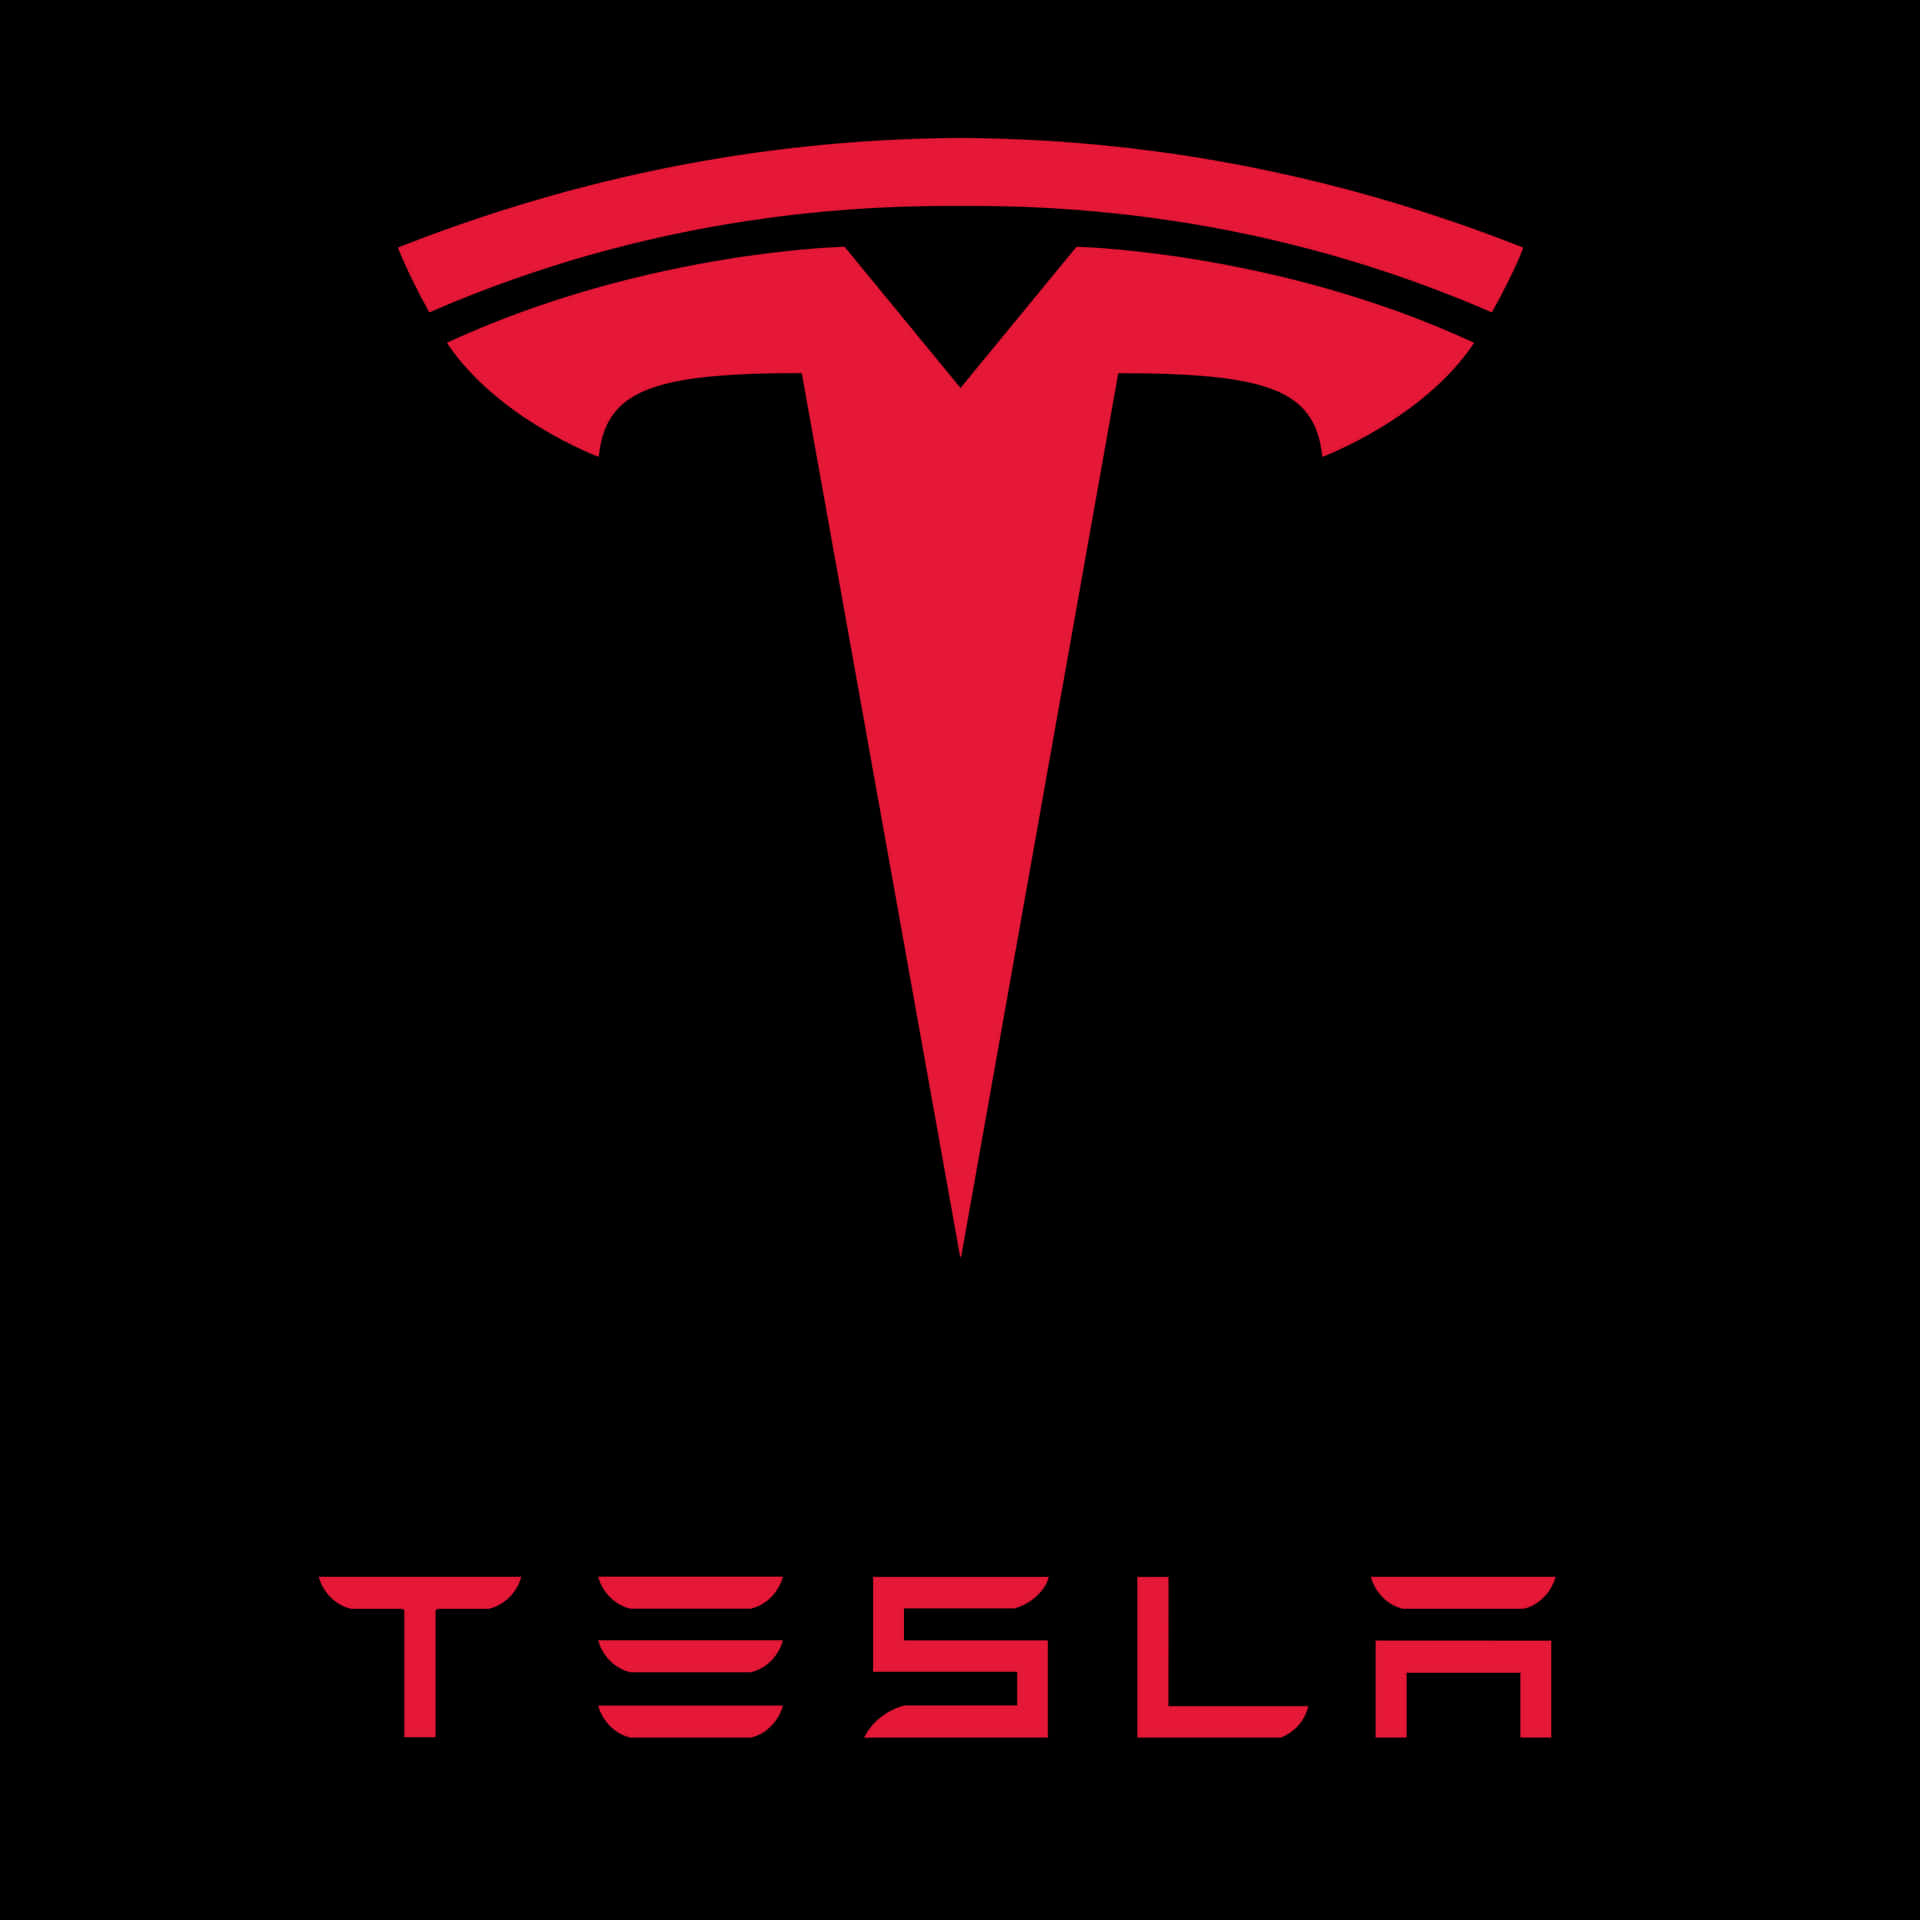 Teslalogo 4k Wallpaper